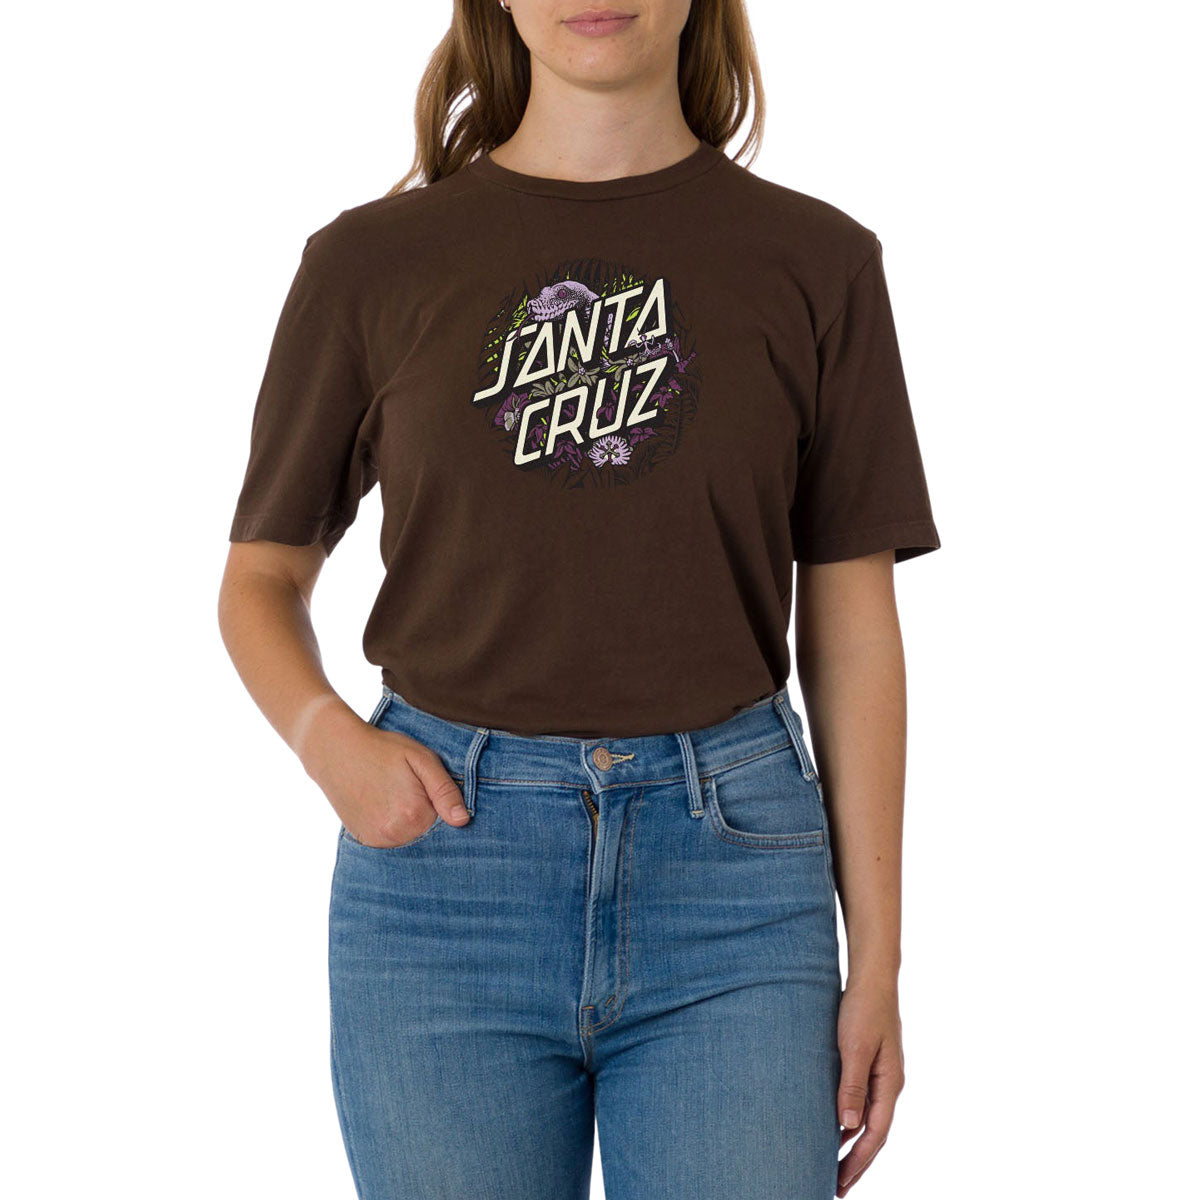 Santa Cruz Womens Asp Flores Dot Relaxed Crew T-Shirt - Chocolate Brown image 1